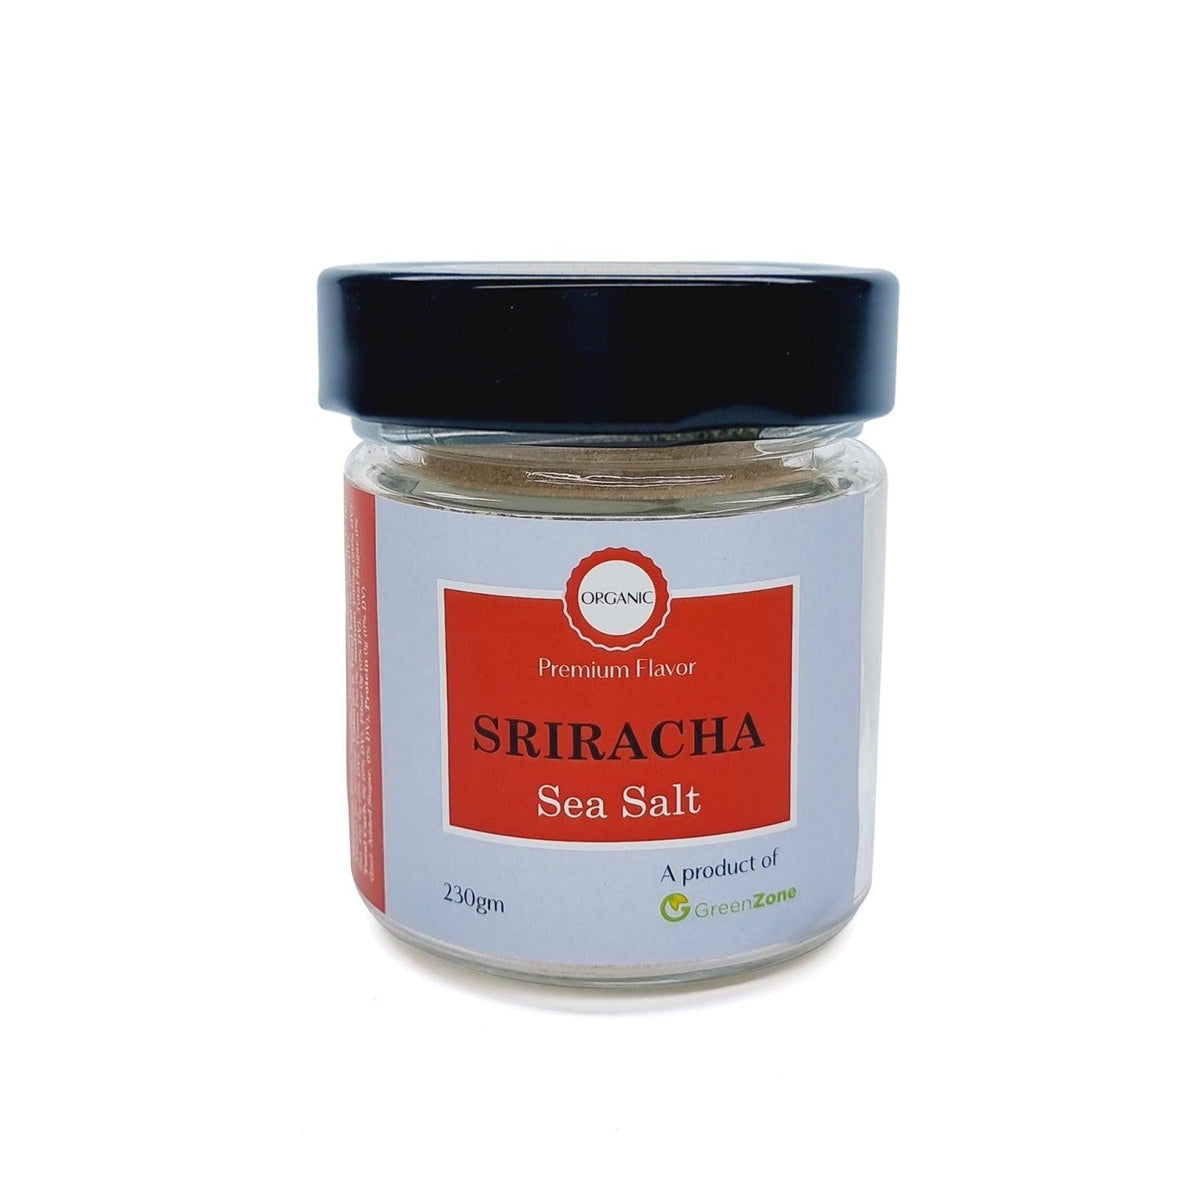 Organic Sriracha Sea Salt - Premium Flavor (230 gm) - Green Zone